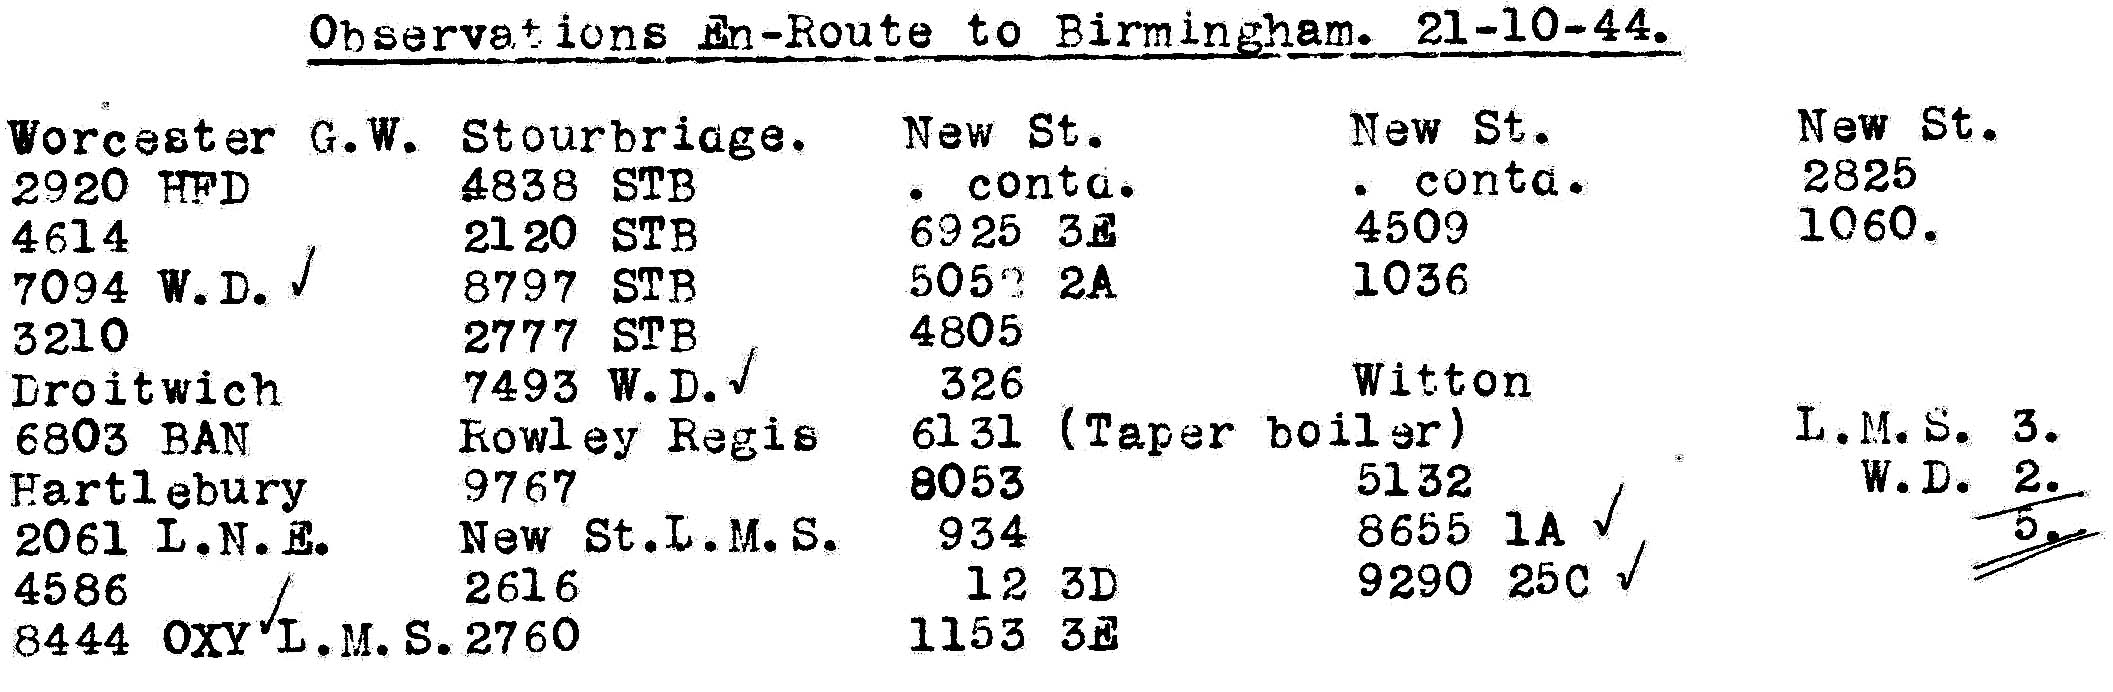 21st October 1944 - Trip to Birmingham.